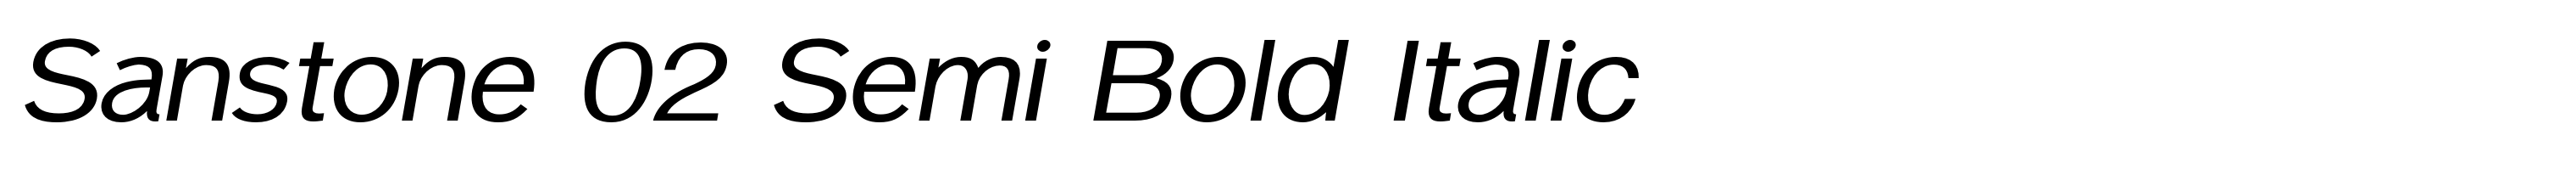 Sanstone 02 Semi Bold Italic